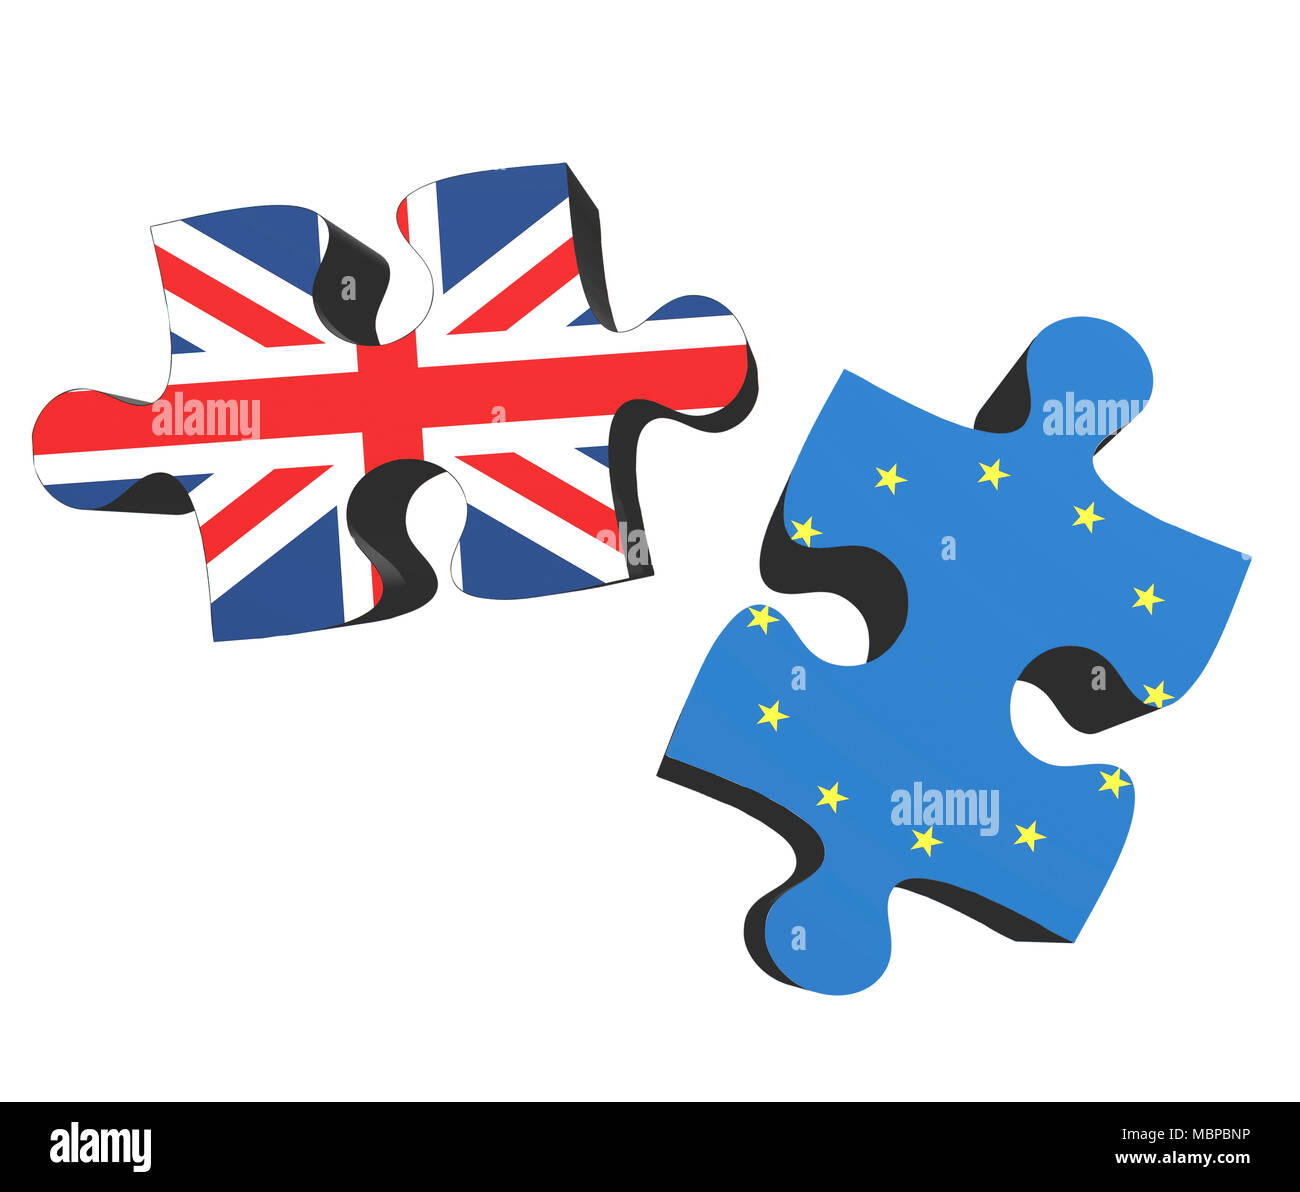 concept image of Brexit, Britain leaving the EU Stock Photo